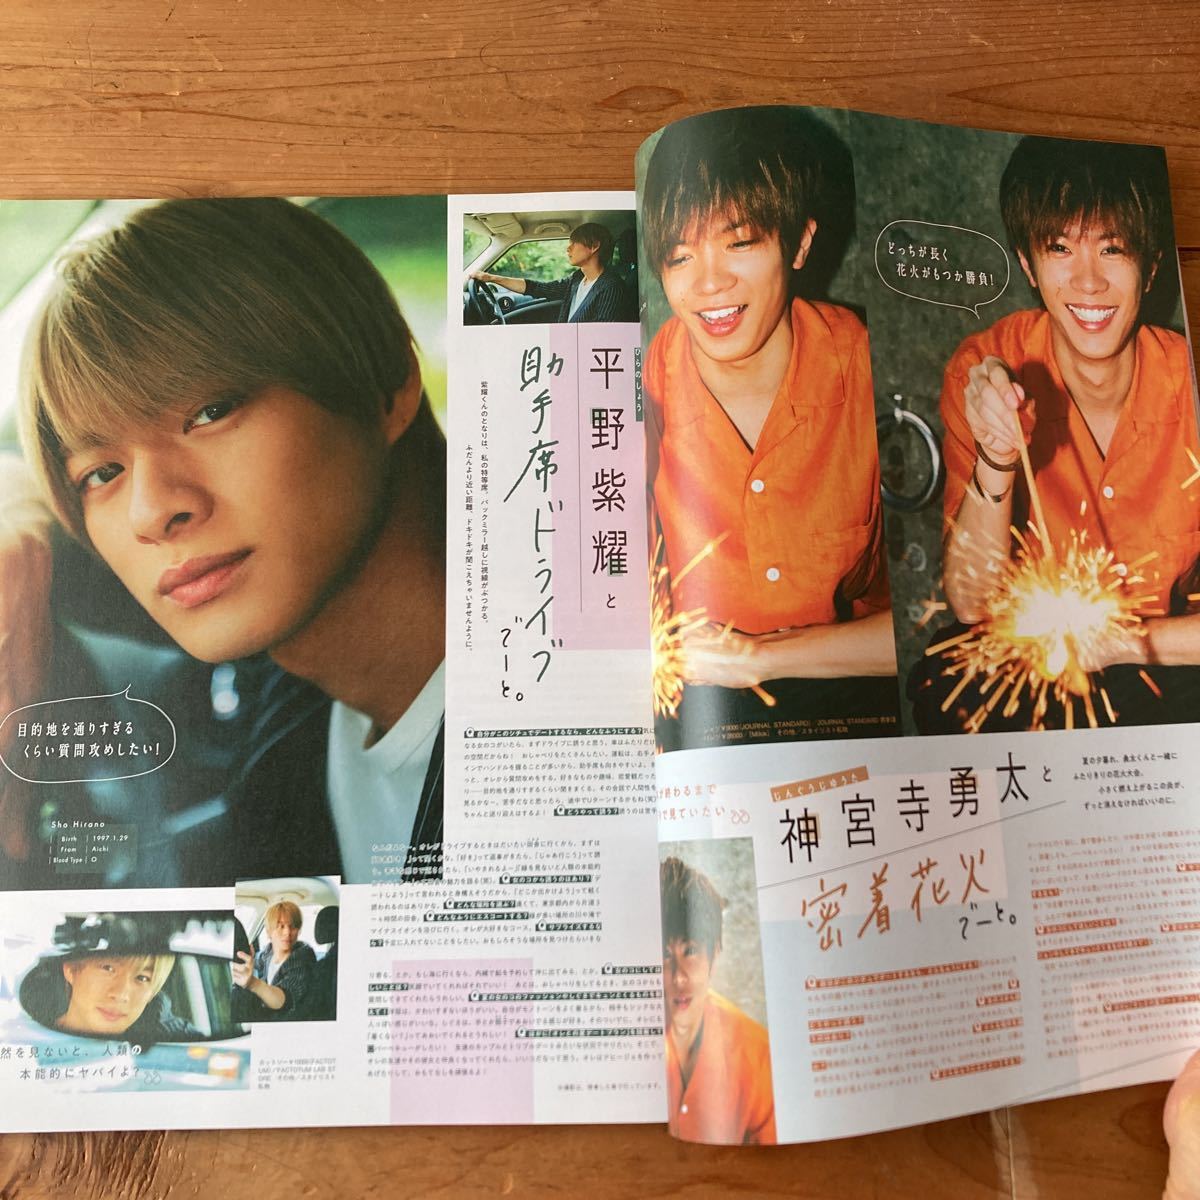  seven чай nSEVENTEEN King & Prince Yamada Ryousuke и т.п. 2019 год 8 месяц журнал 